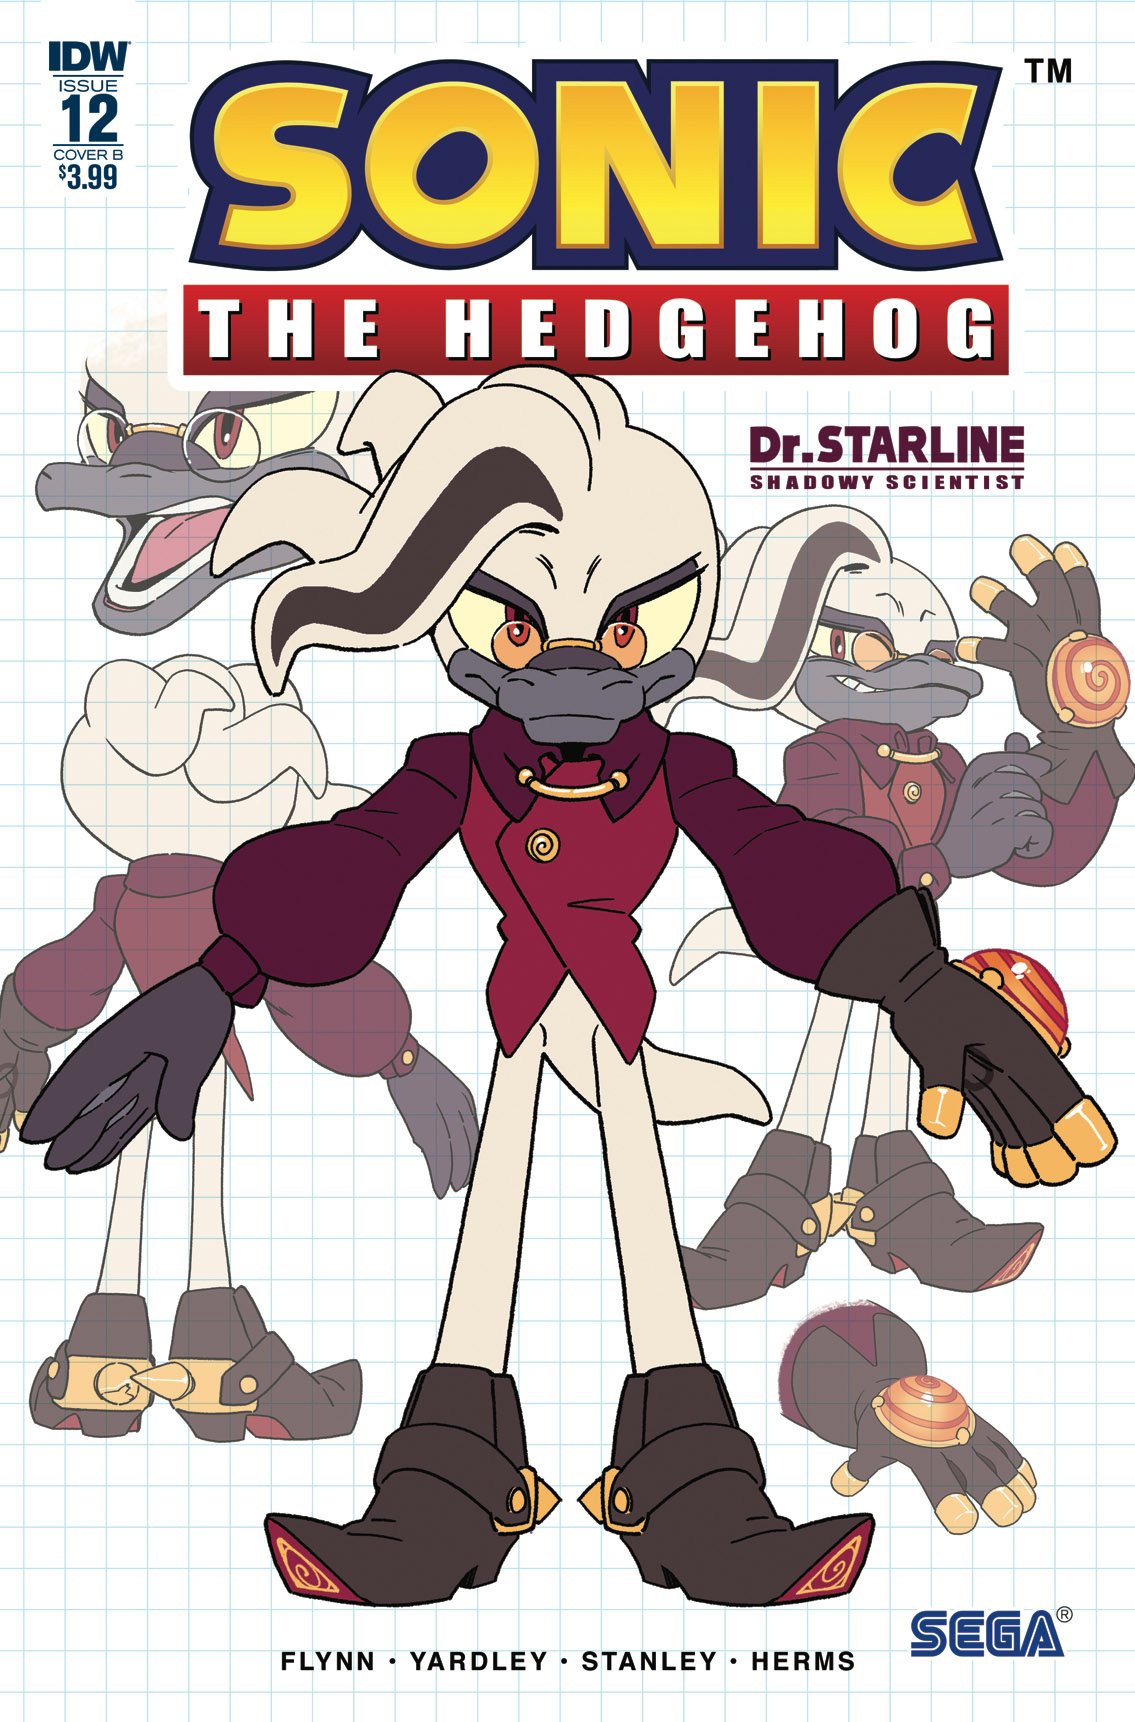 Sonic the Hedgehog 012 (December 2018) (cover b)